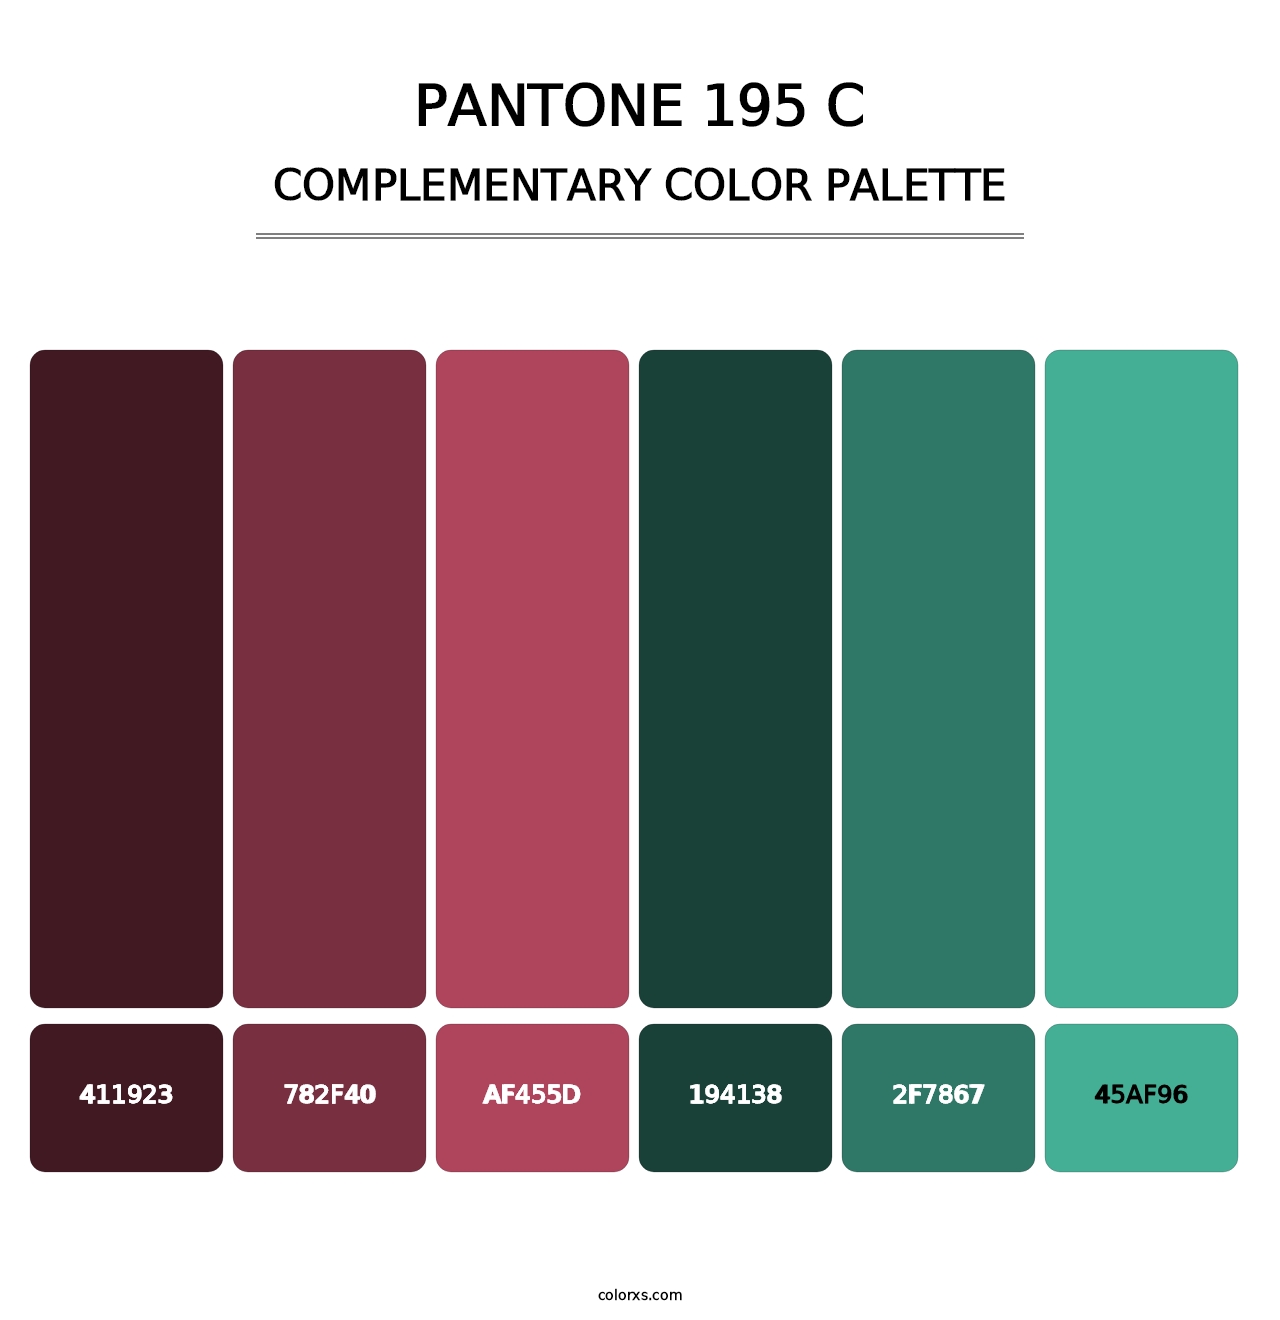 PANTONE 195 C - Complementary Color Palette